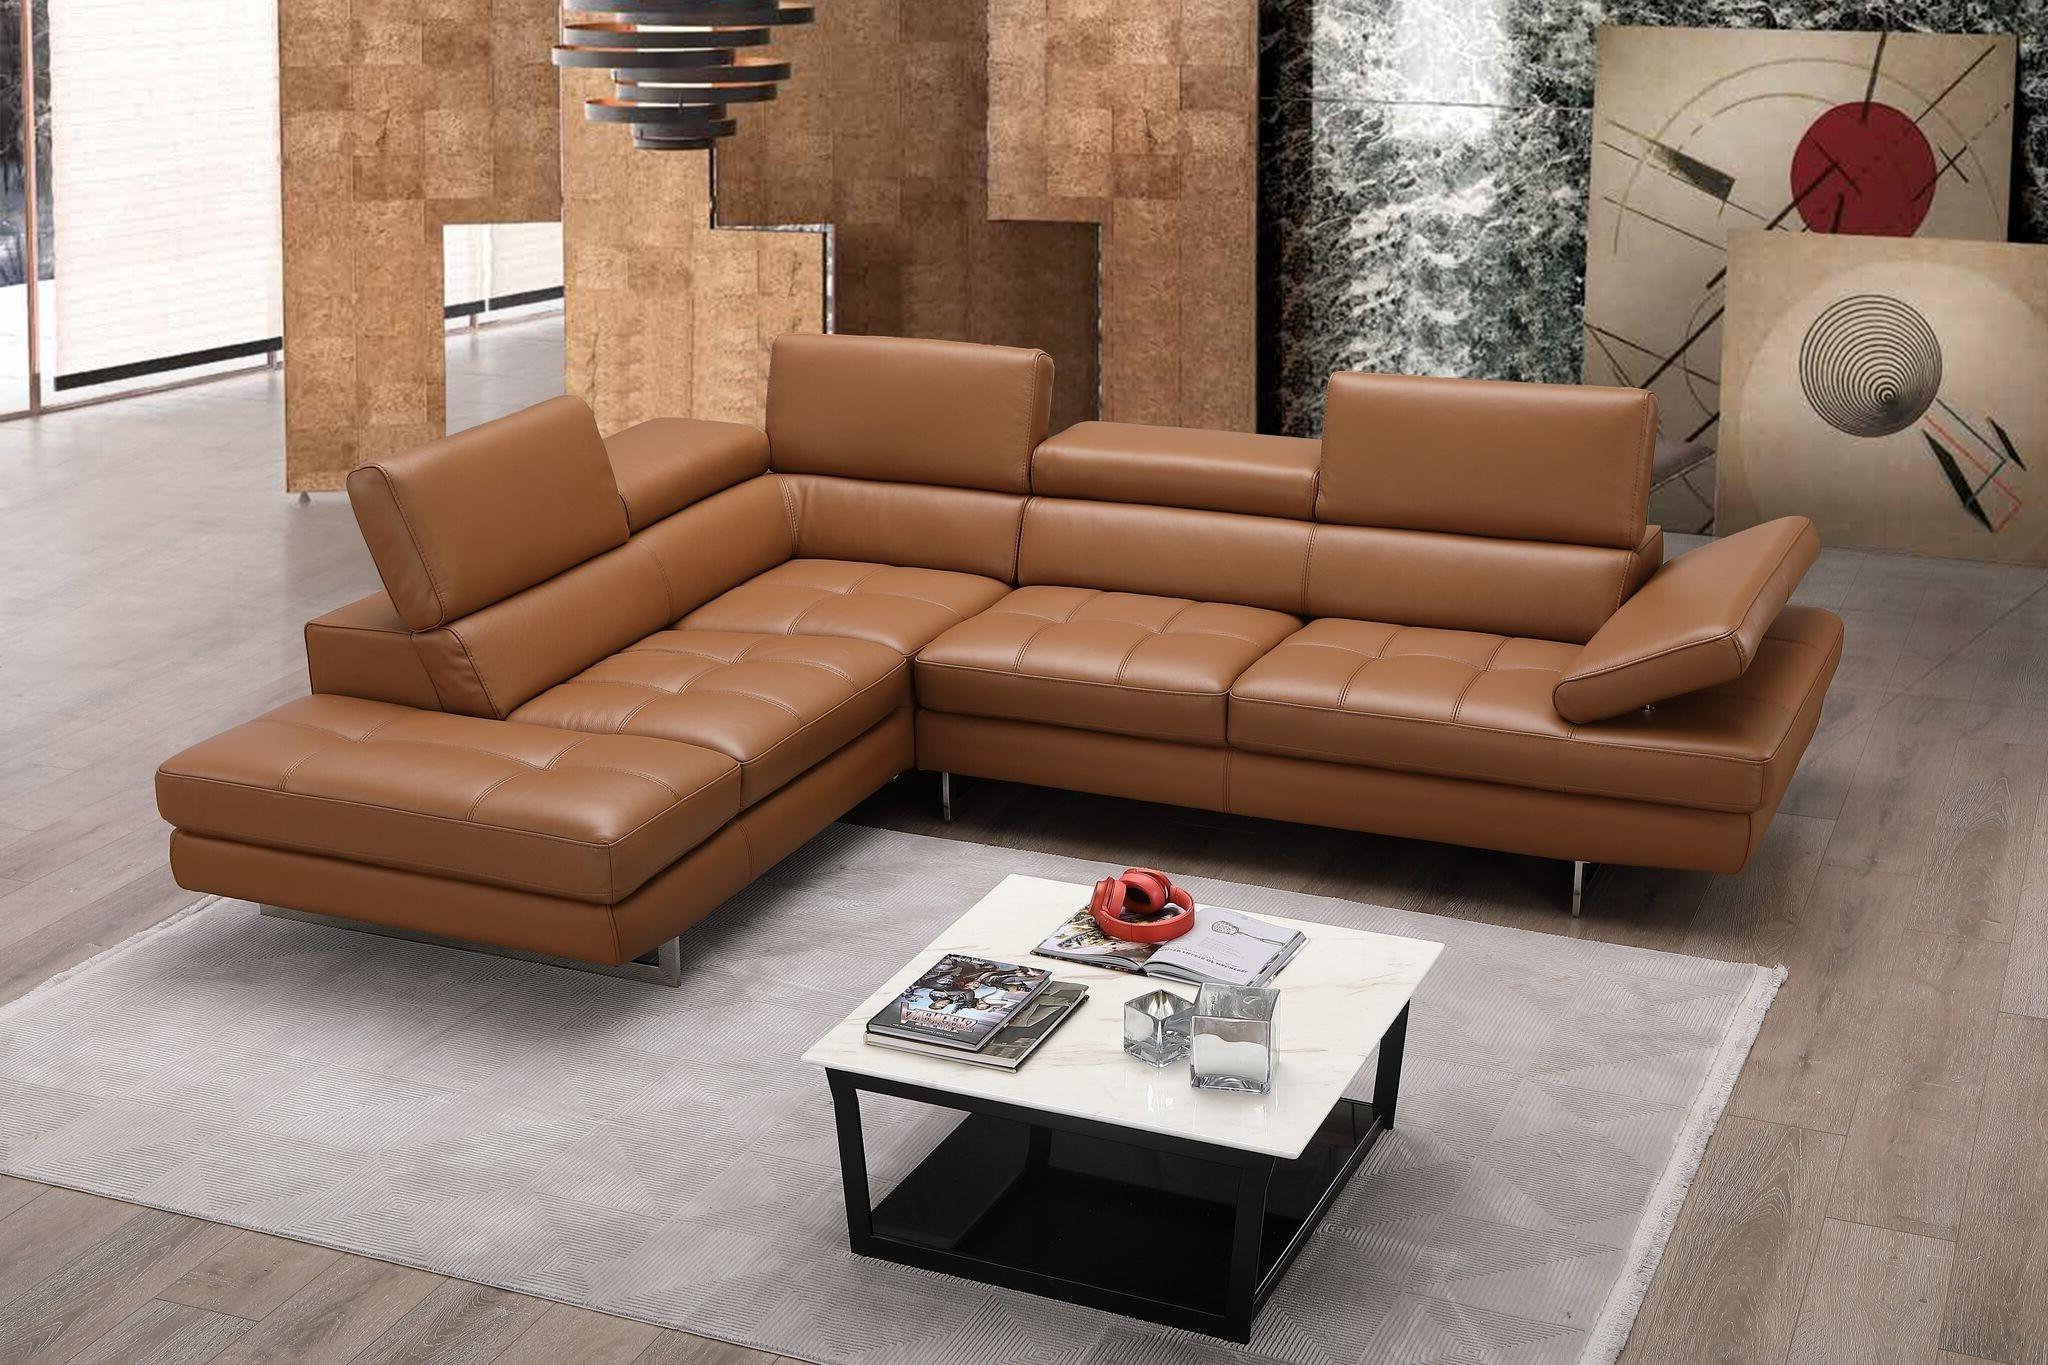 

    
Caramel Full Top Grain Leather Italian Sectional Sofa LHC Modern J&M A761
